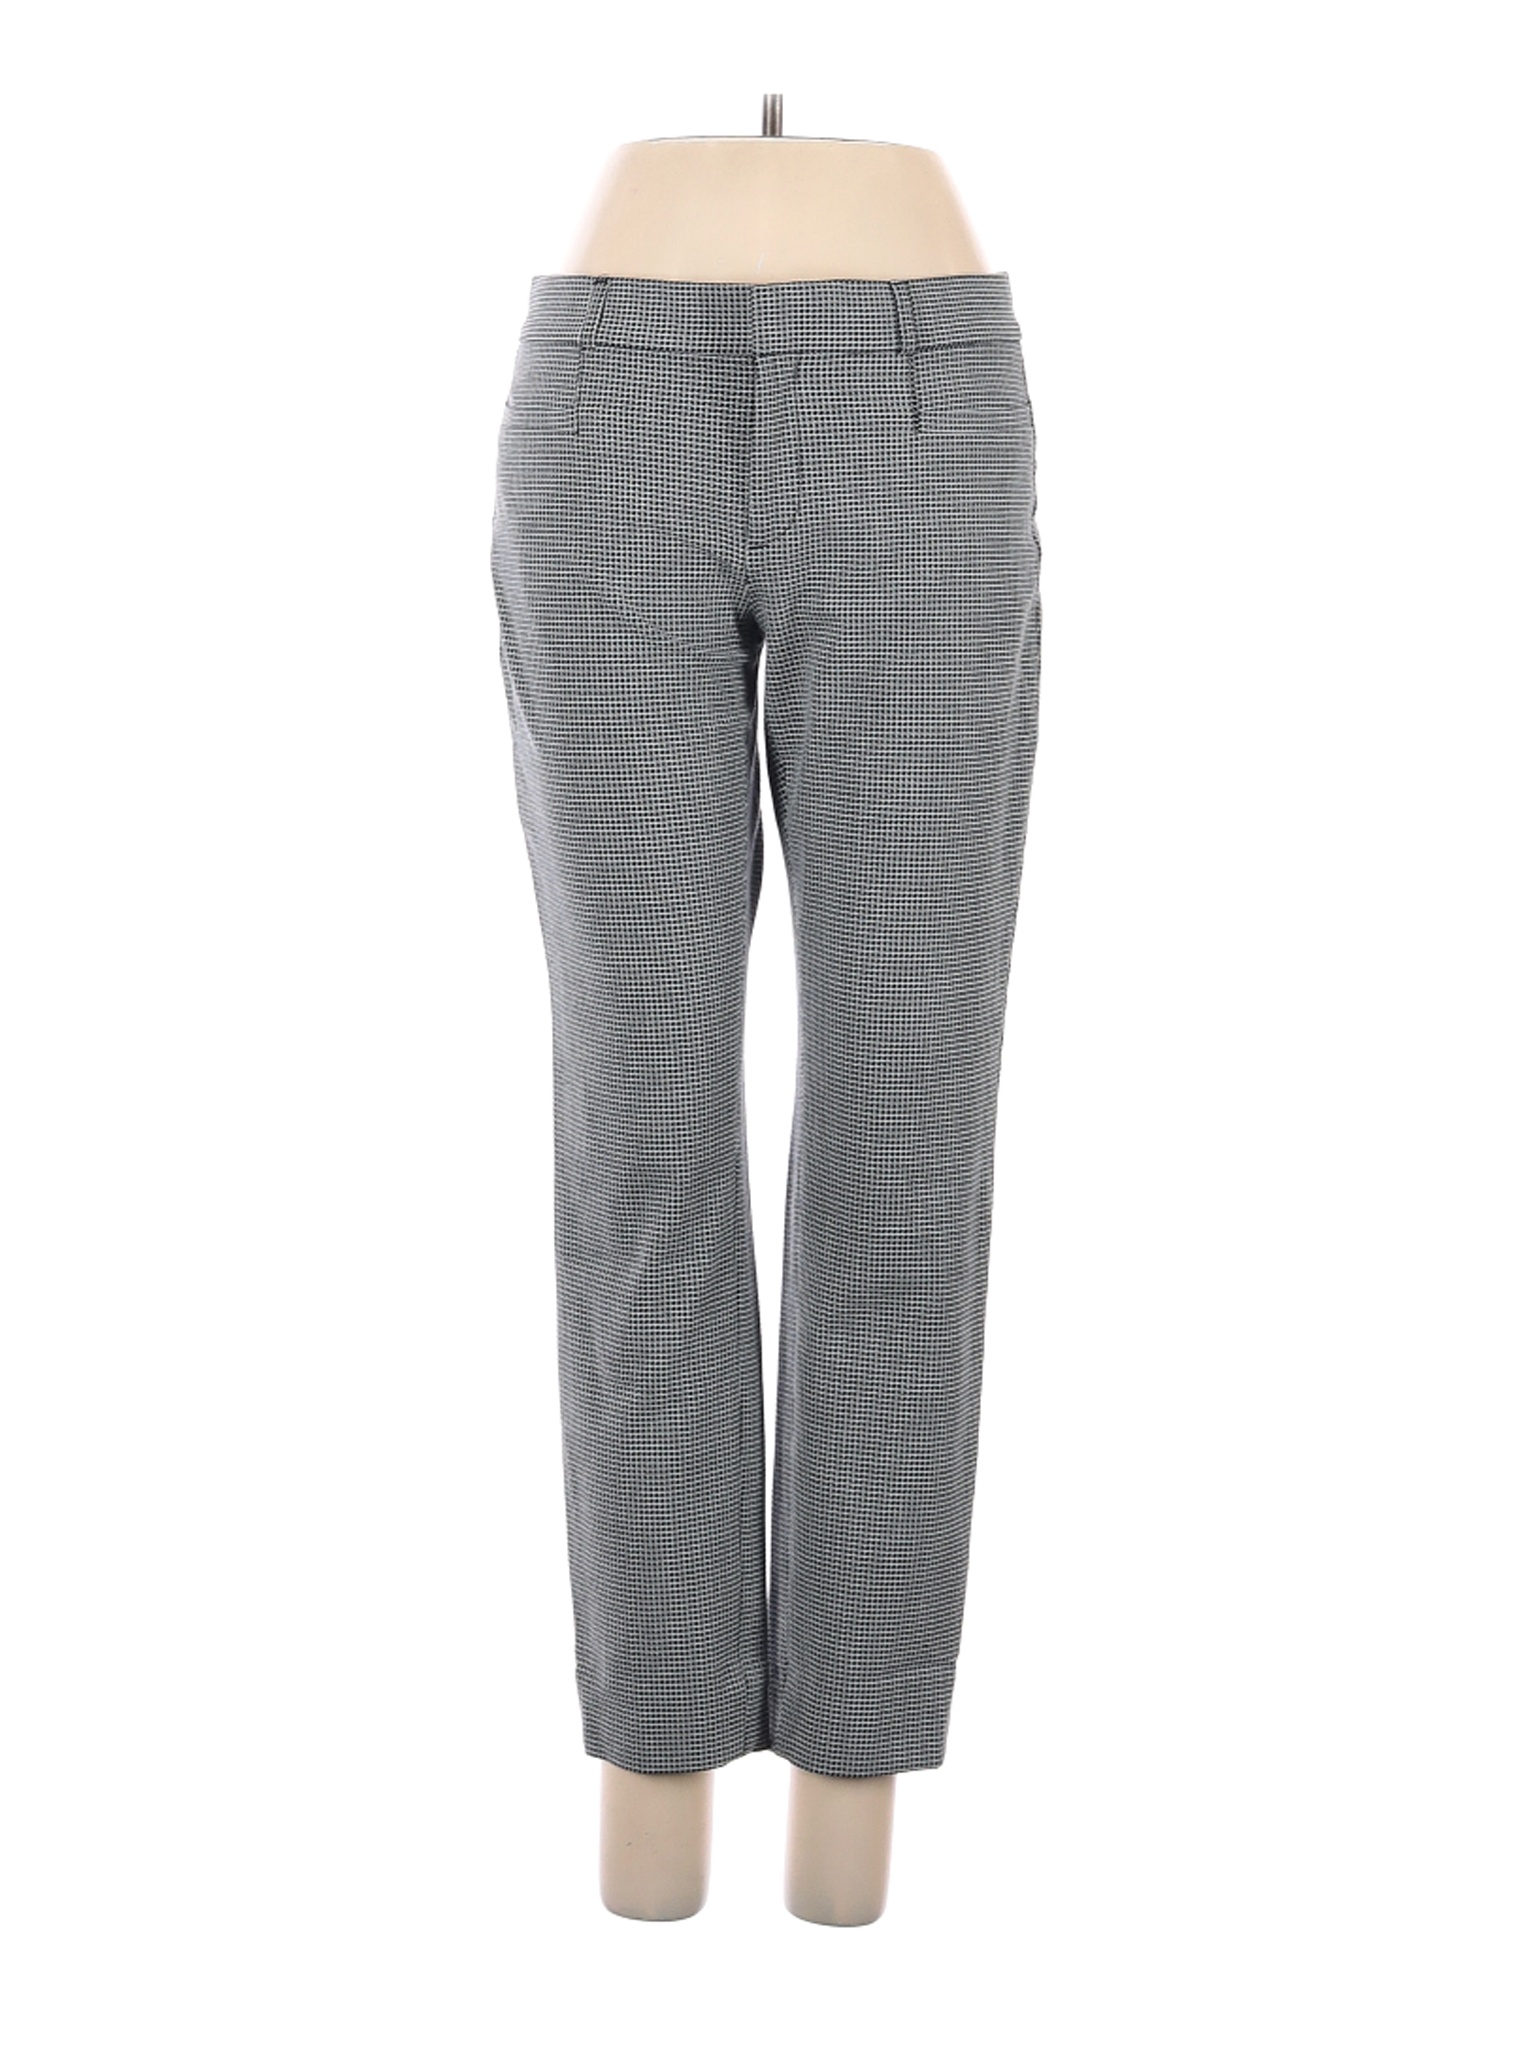 Banana Republic Factory Store Women Gray Dress Pants 2 | eBay